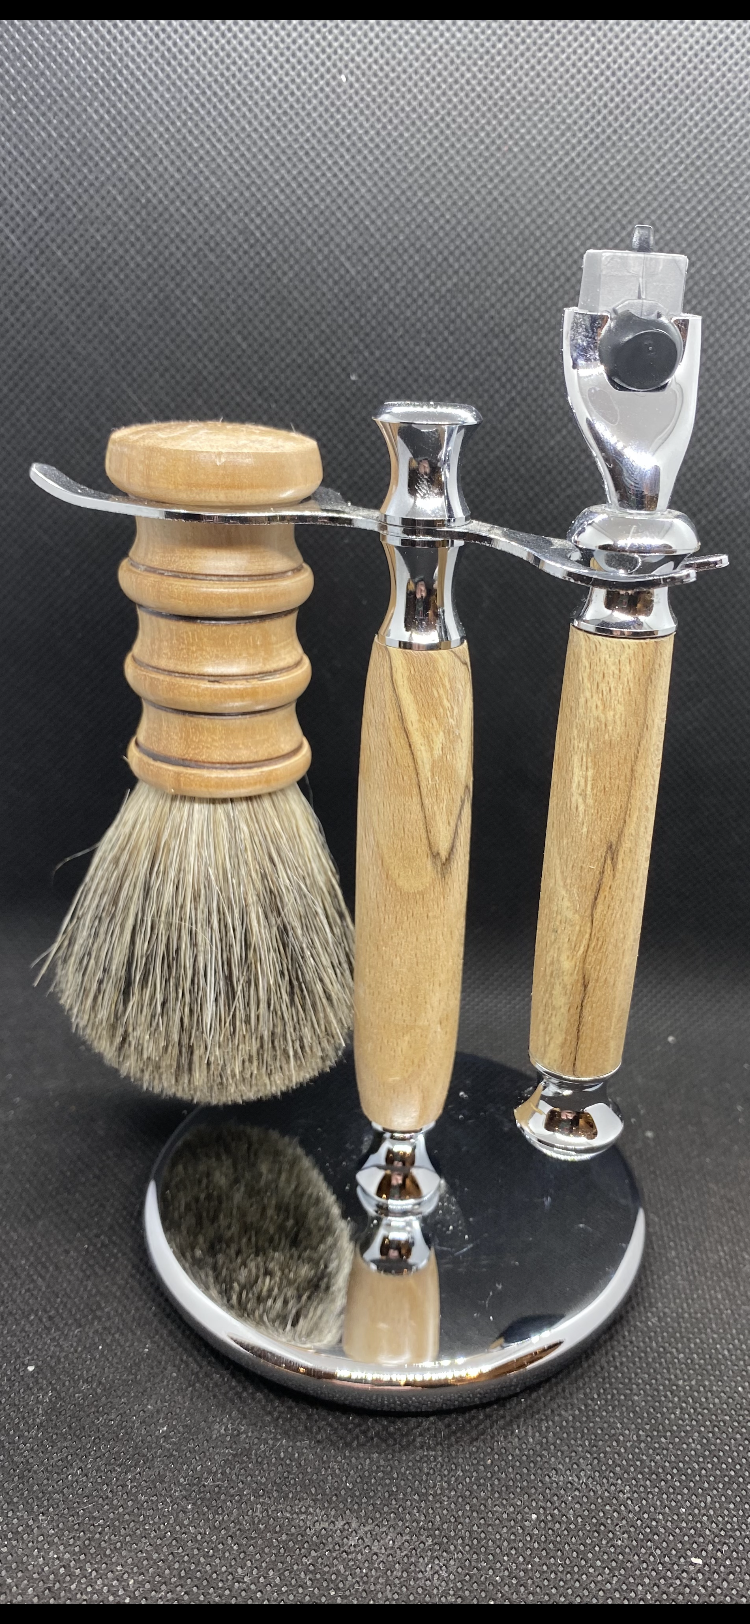 shave set with wood handle razor and shaving brush